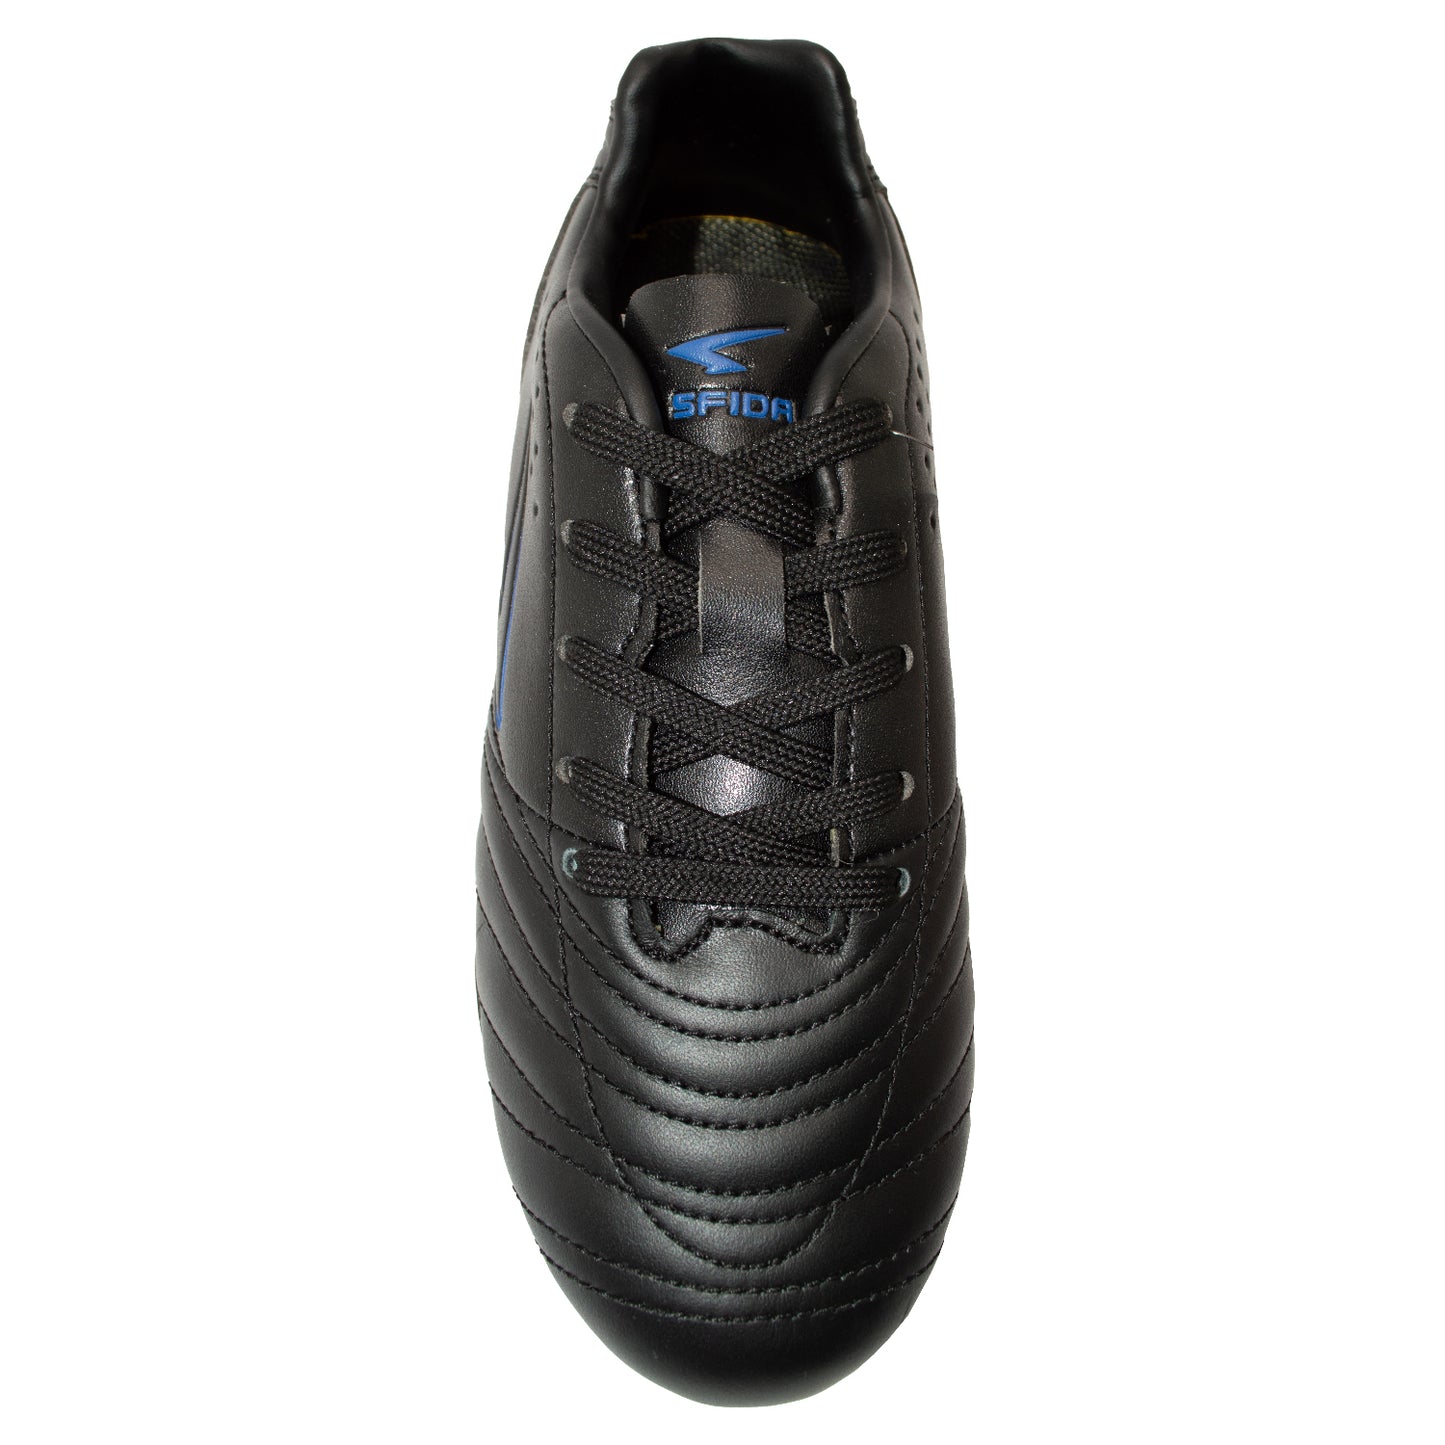 Elite Junior Leather Football Boots - Black/Royal